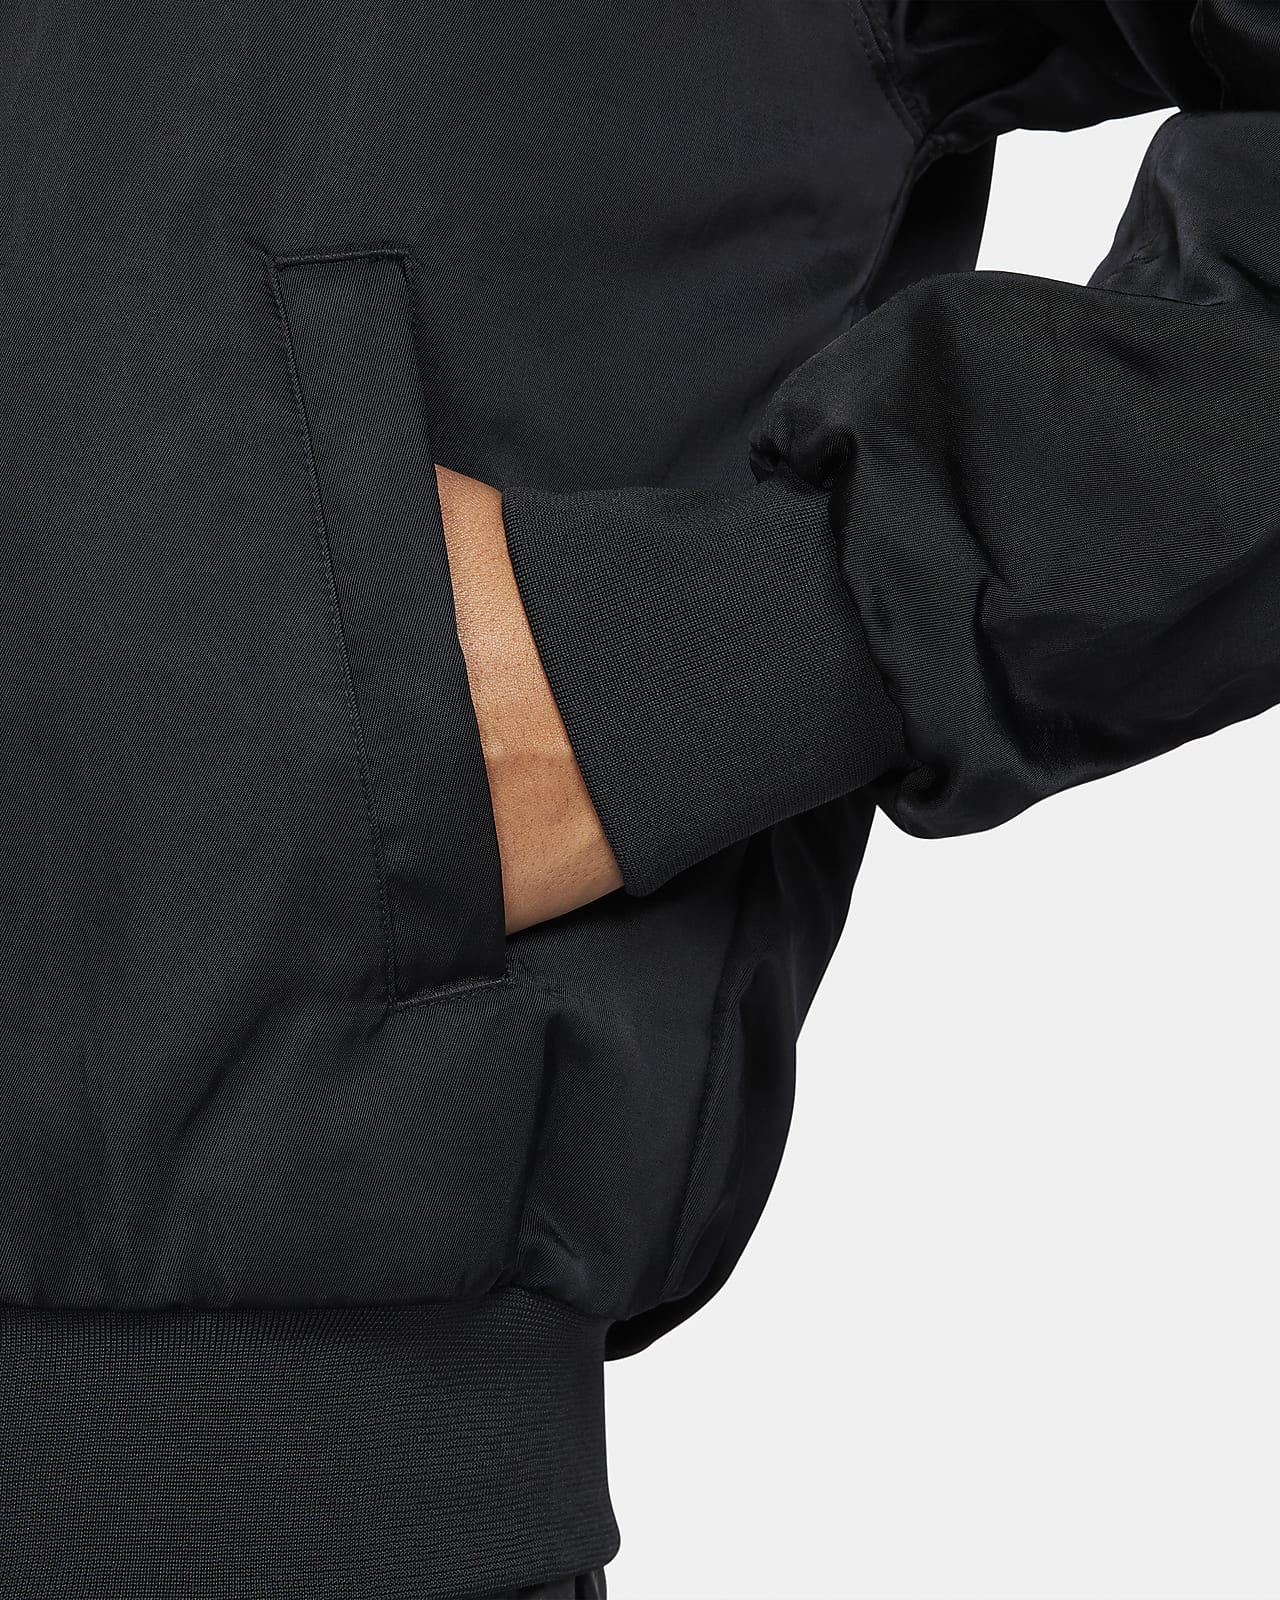 Nike longline bomber jacket in black - ShopStyle